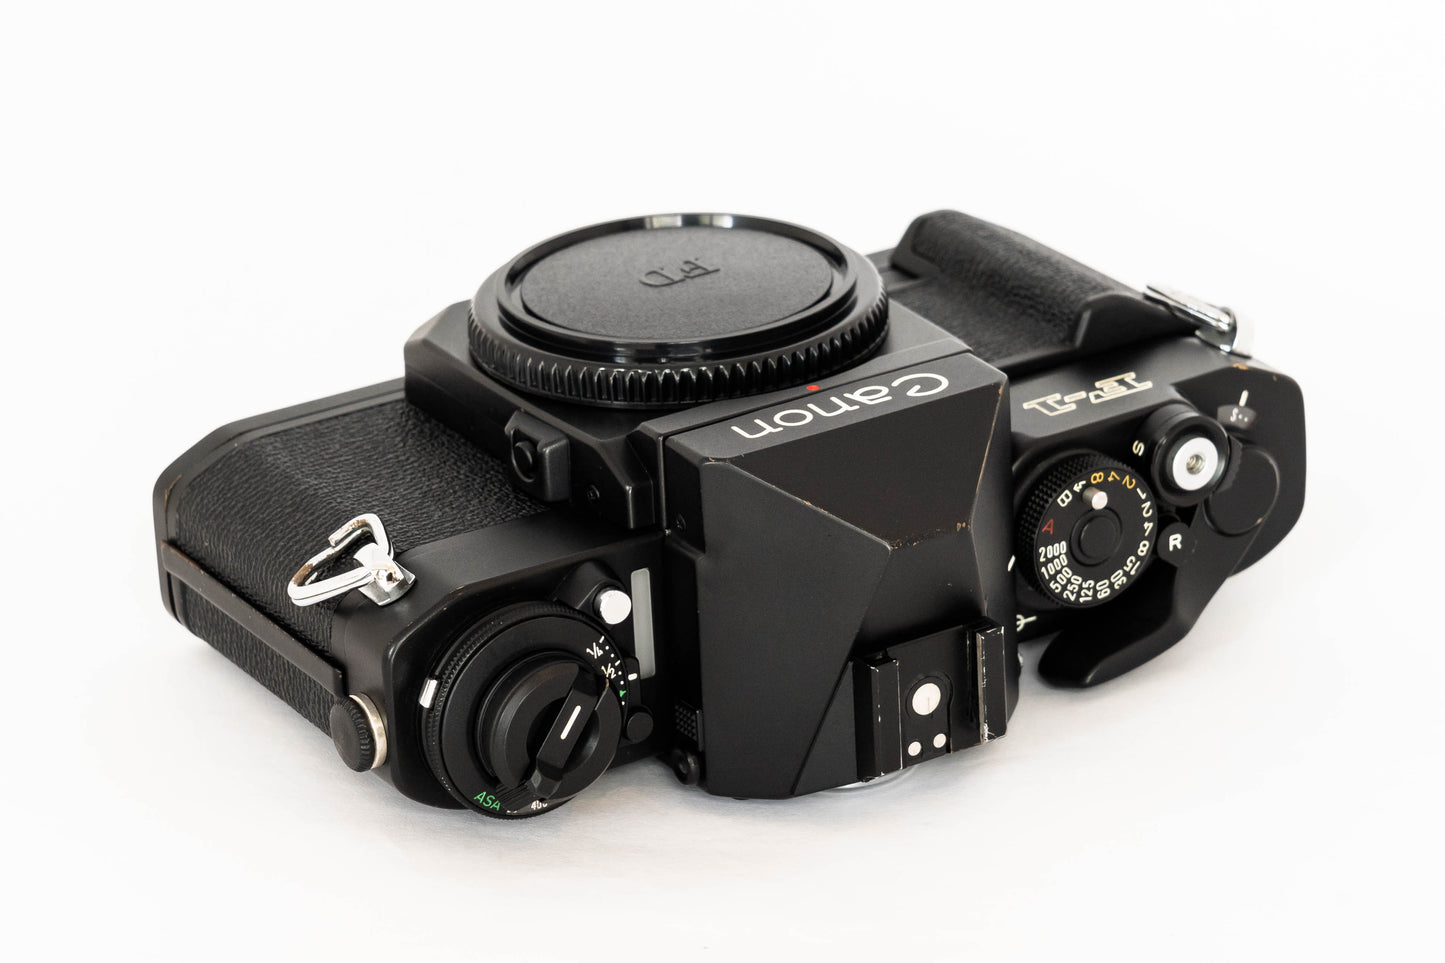 Canon New F-1 Eye Level Finder 35mm SLR Film Camera